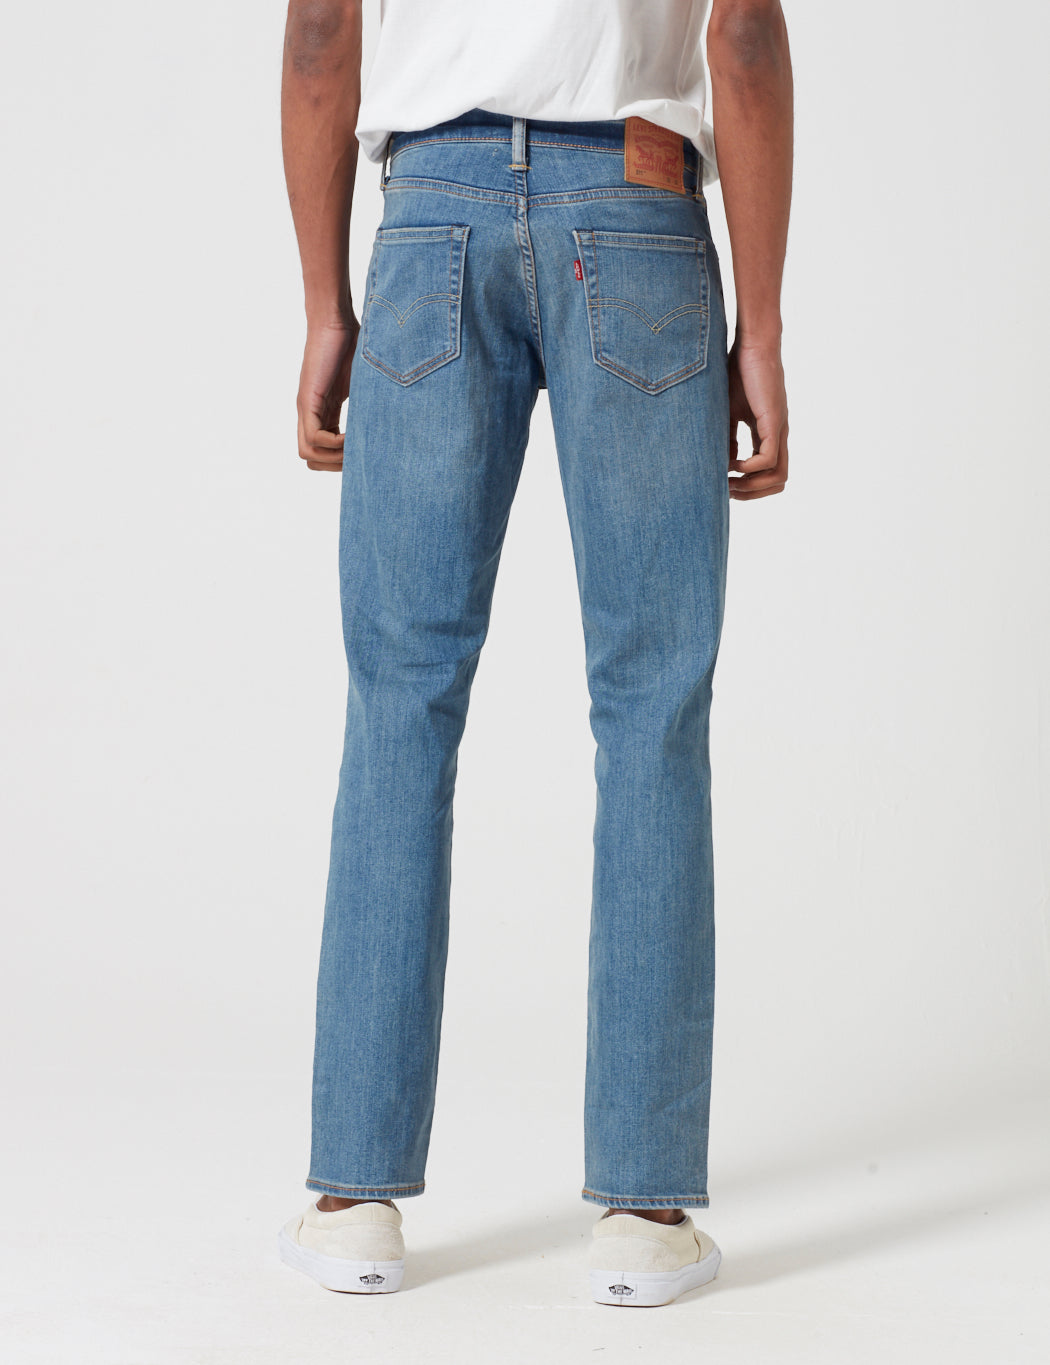 Levis 511 Jeans (Slim Straight) - Dennis Blue | URBAN EXCESS.